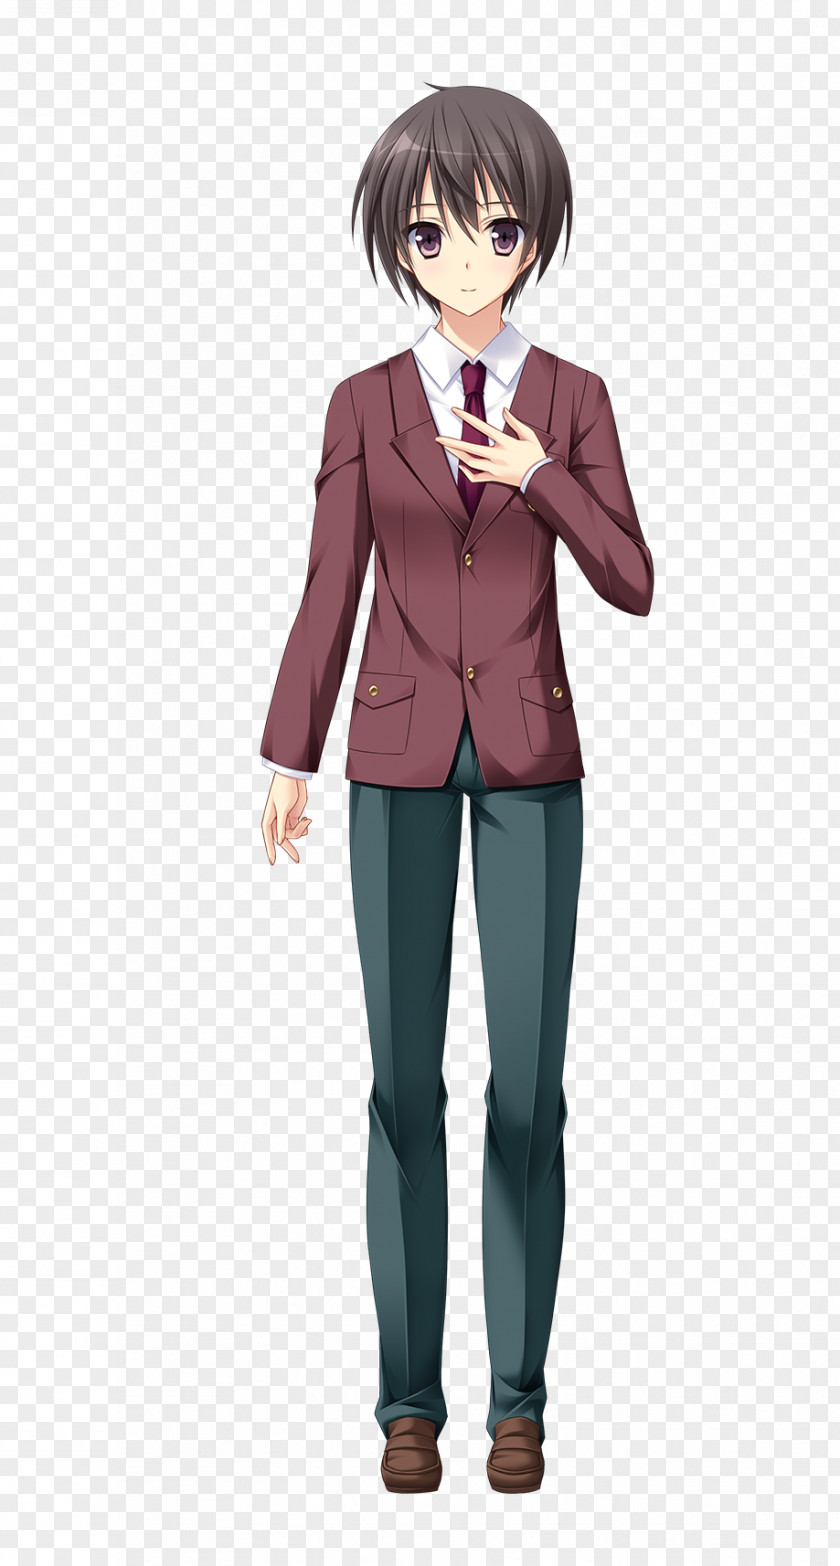 Blazer Suit School Uniform Formal Wear Necktie PNG